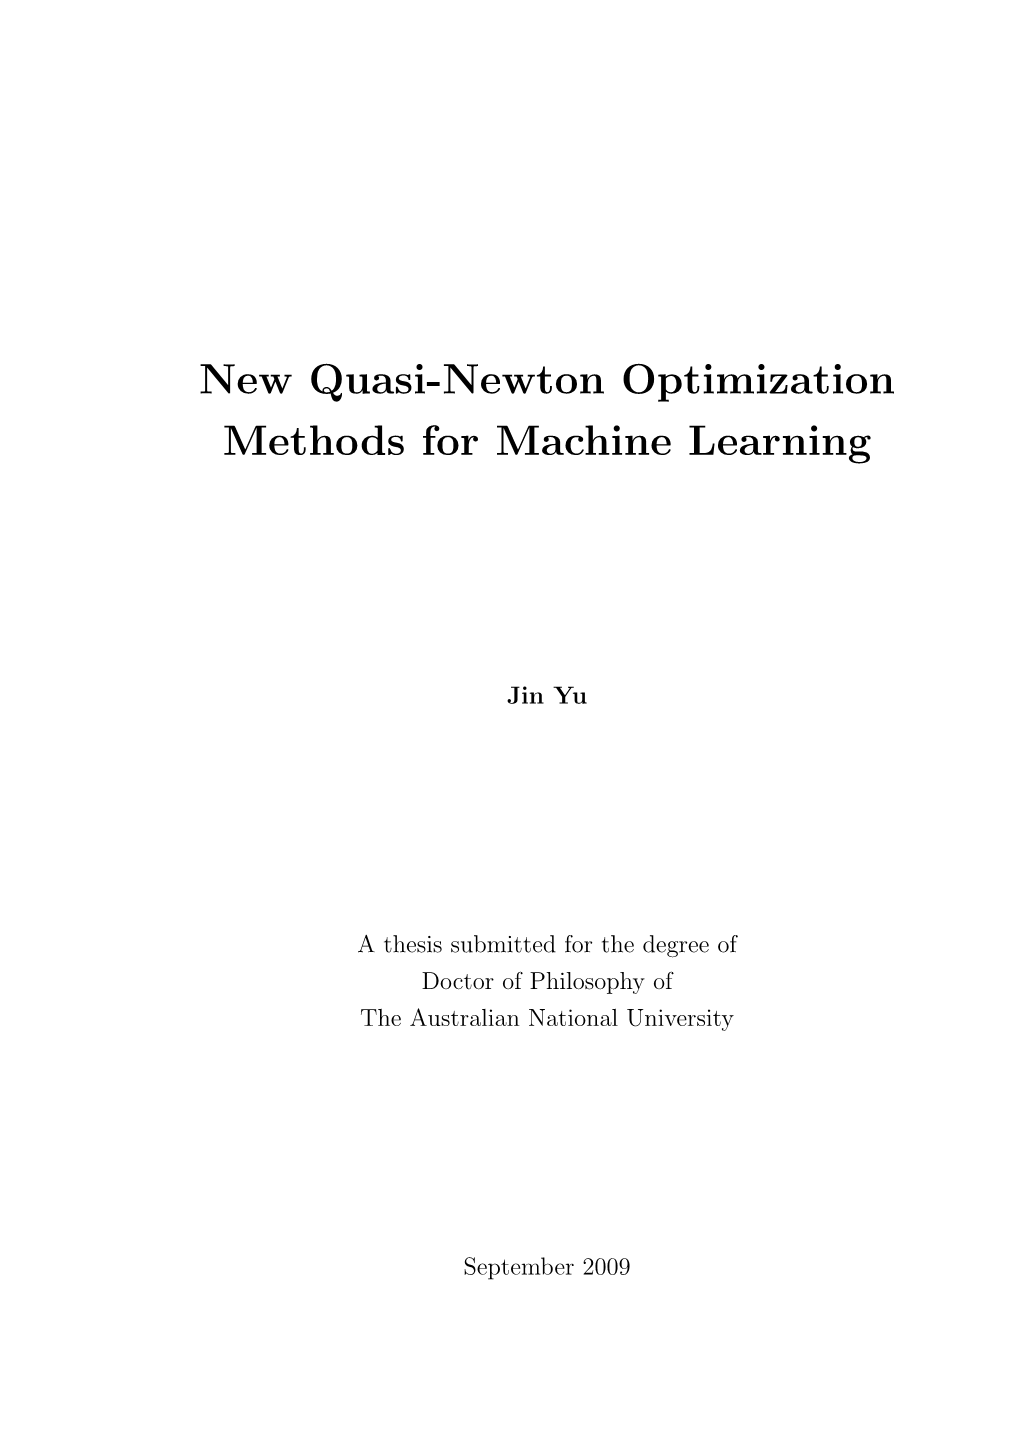 New Quasi-Newton Optimization Methods for Machine Learning